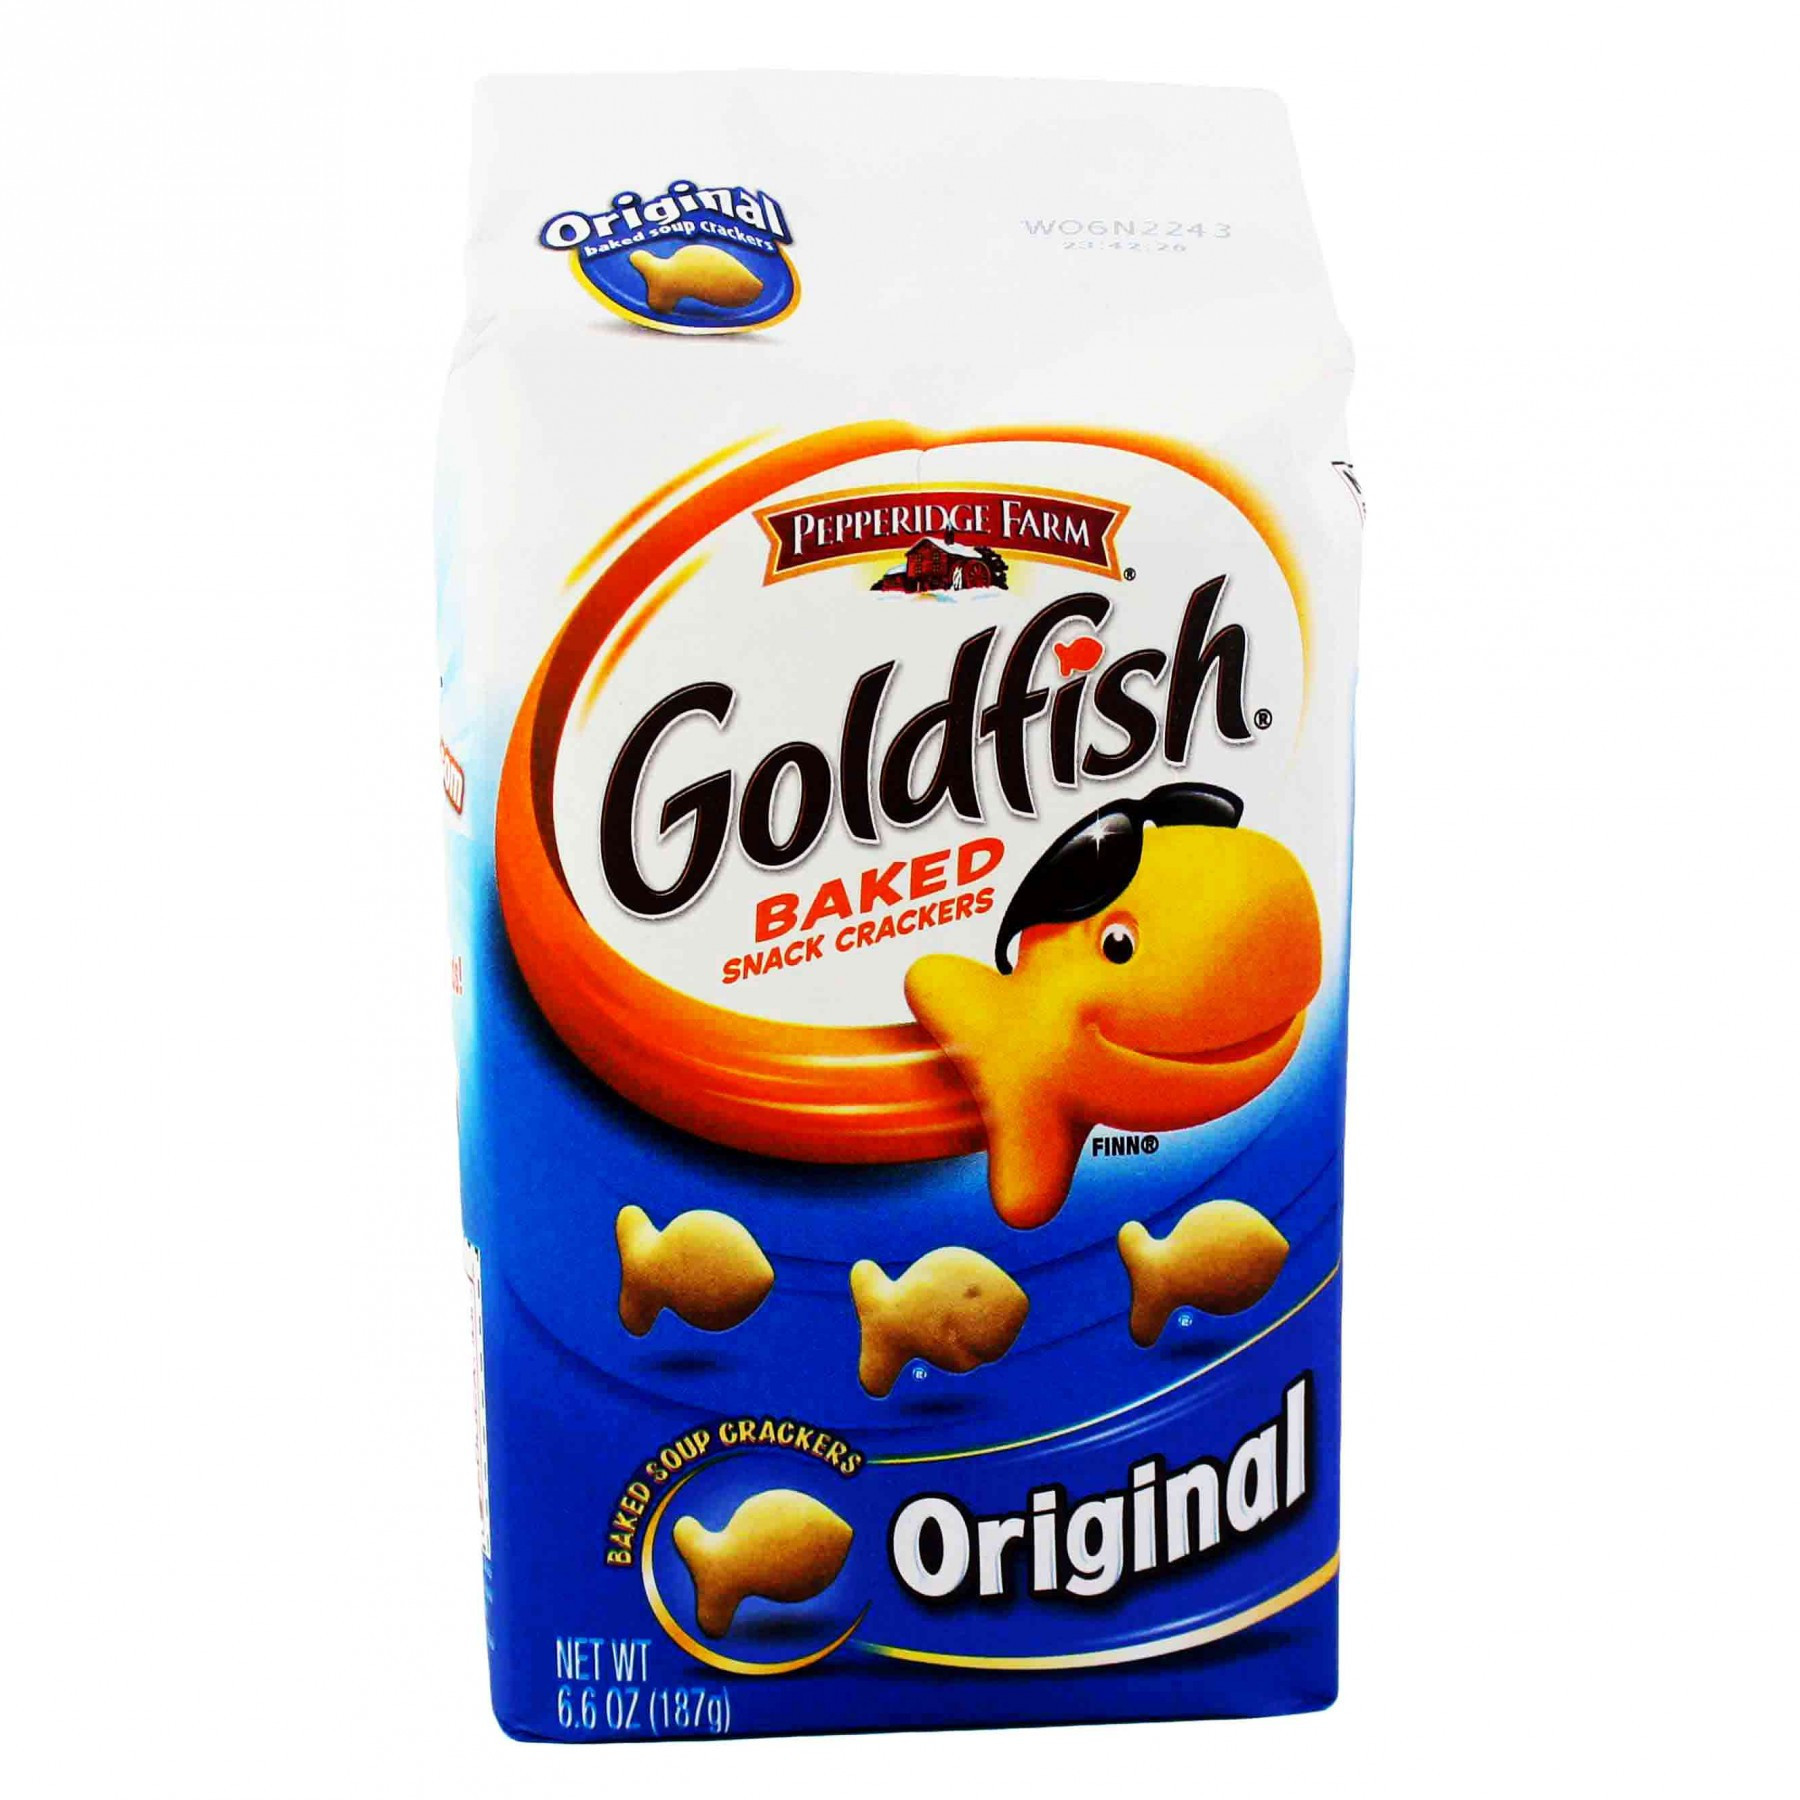 Original Goldfish Crackers New the Best original Goldfish Crackers Best Recipes Ideas